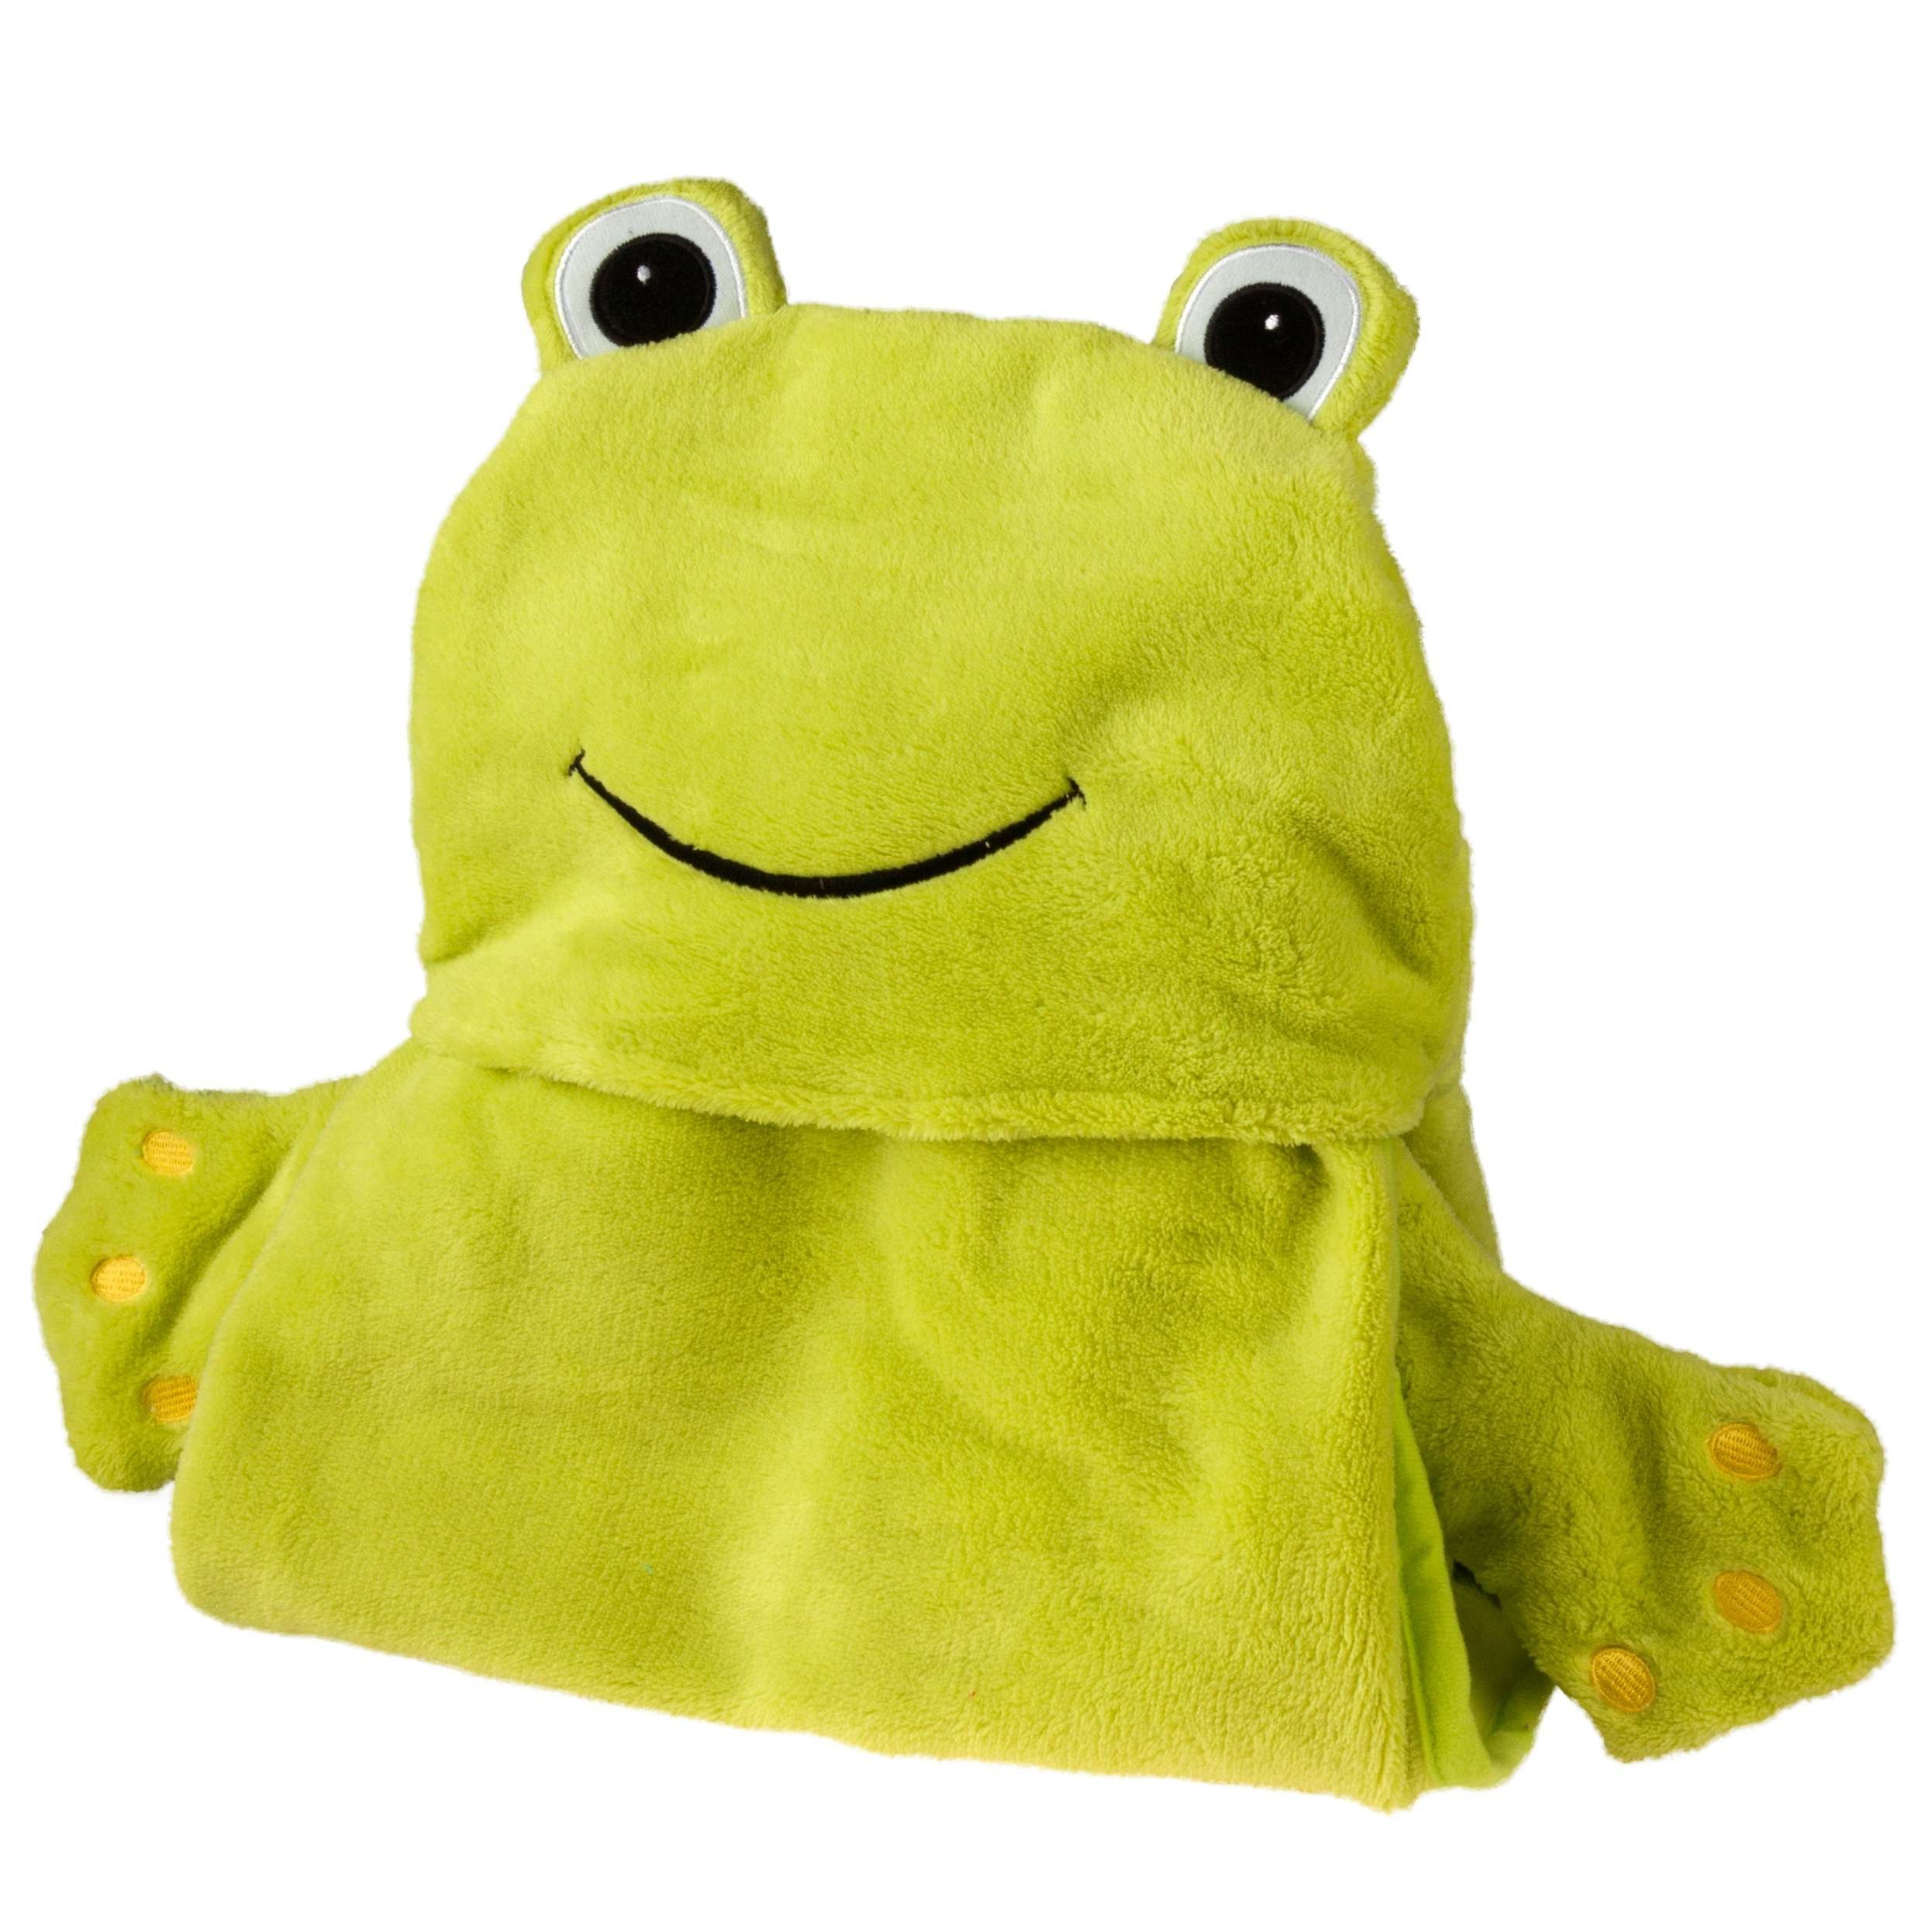 coperta per bambini Froggy green 130 x 100 cm